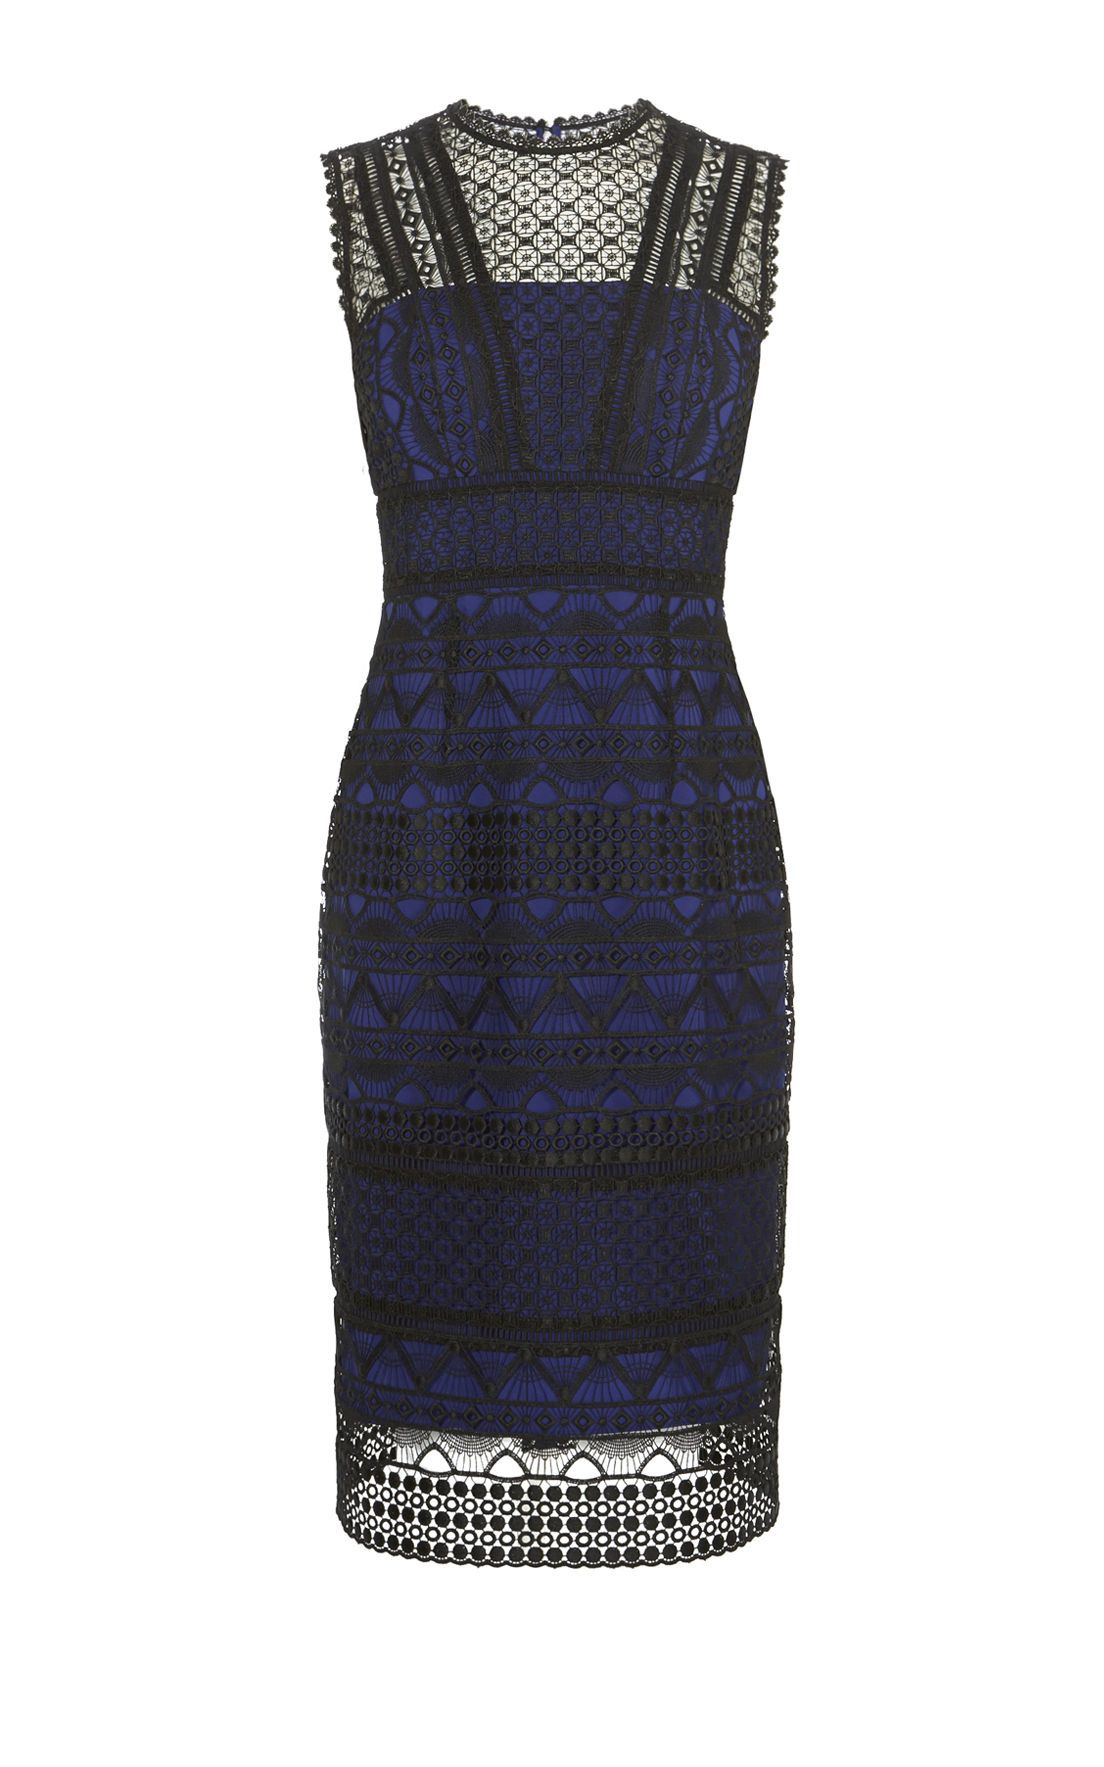 Karen Millen Graphic Lace Pencil Dress in Blue - Lyst